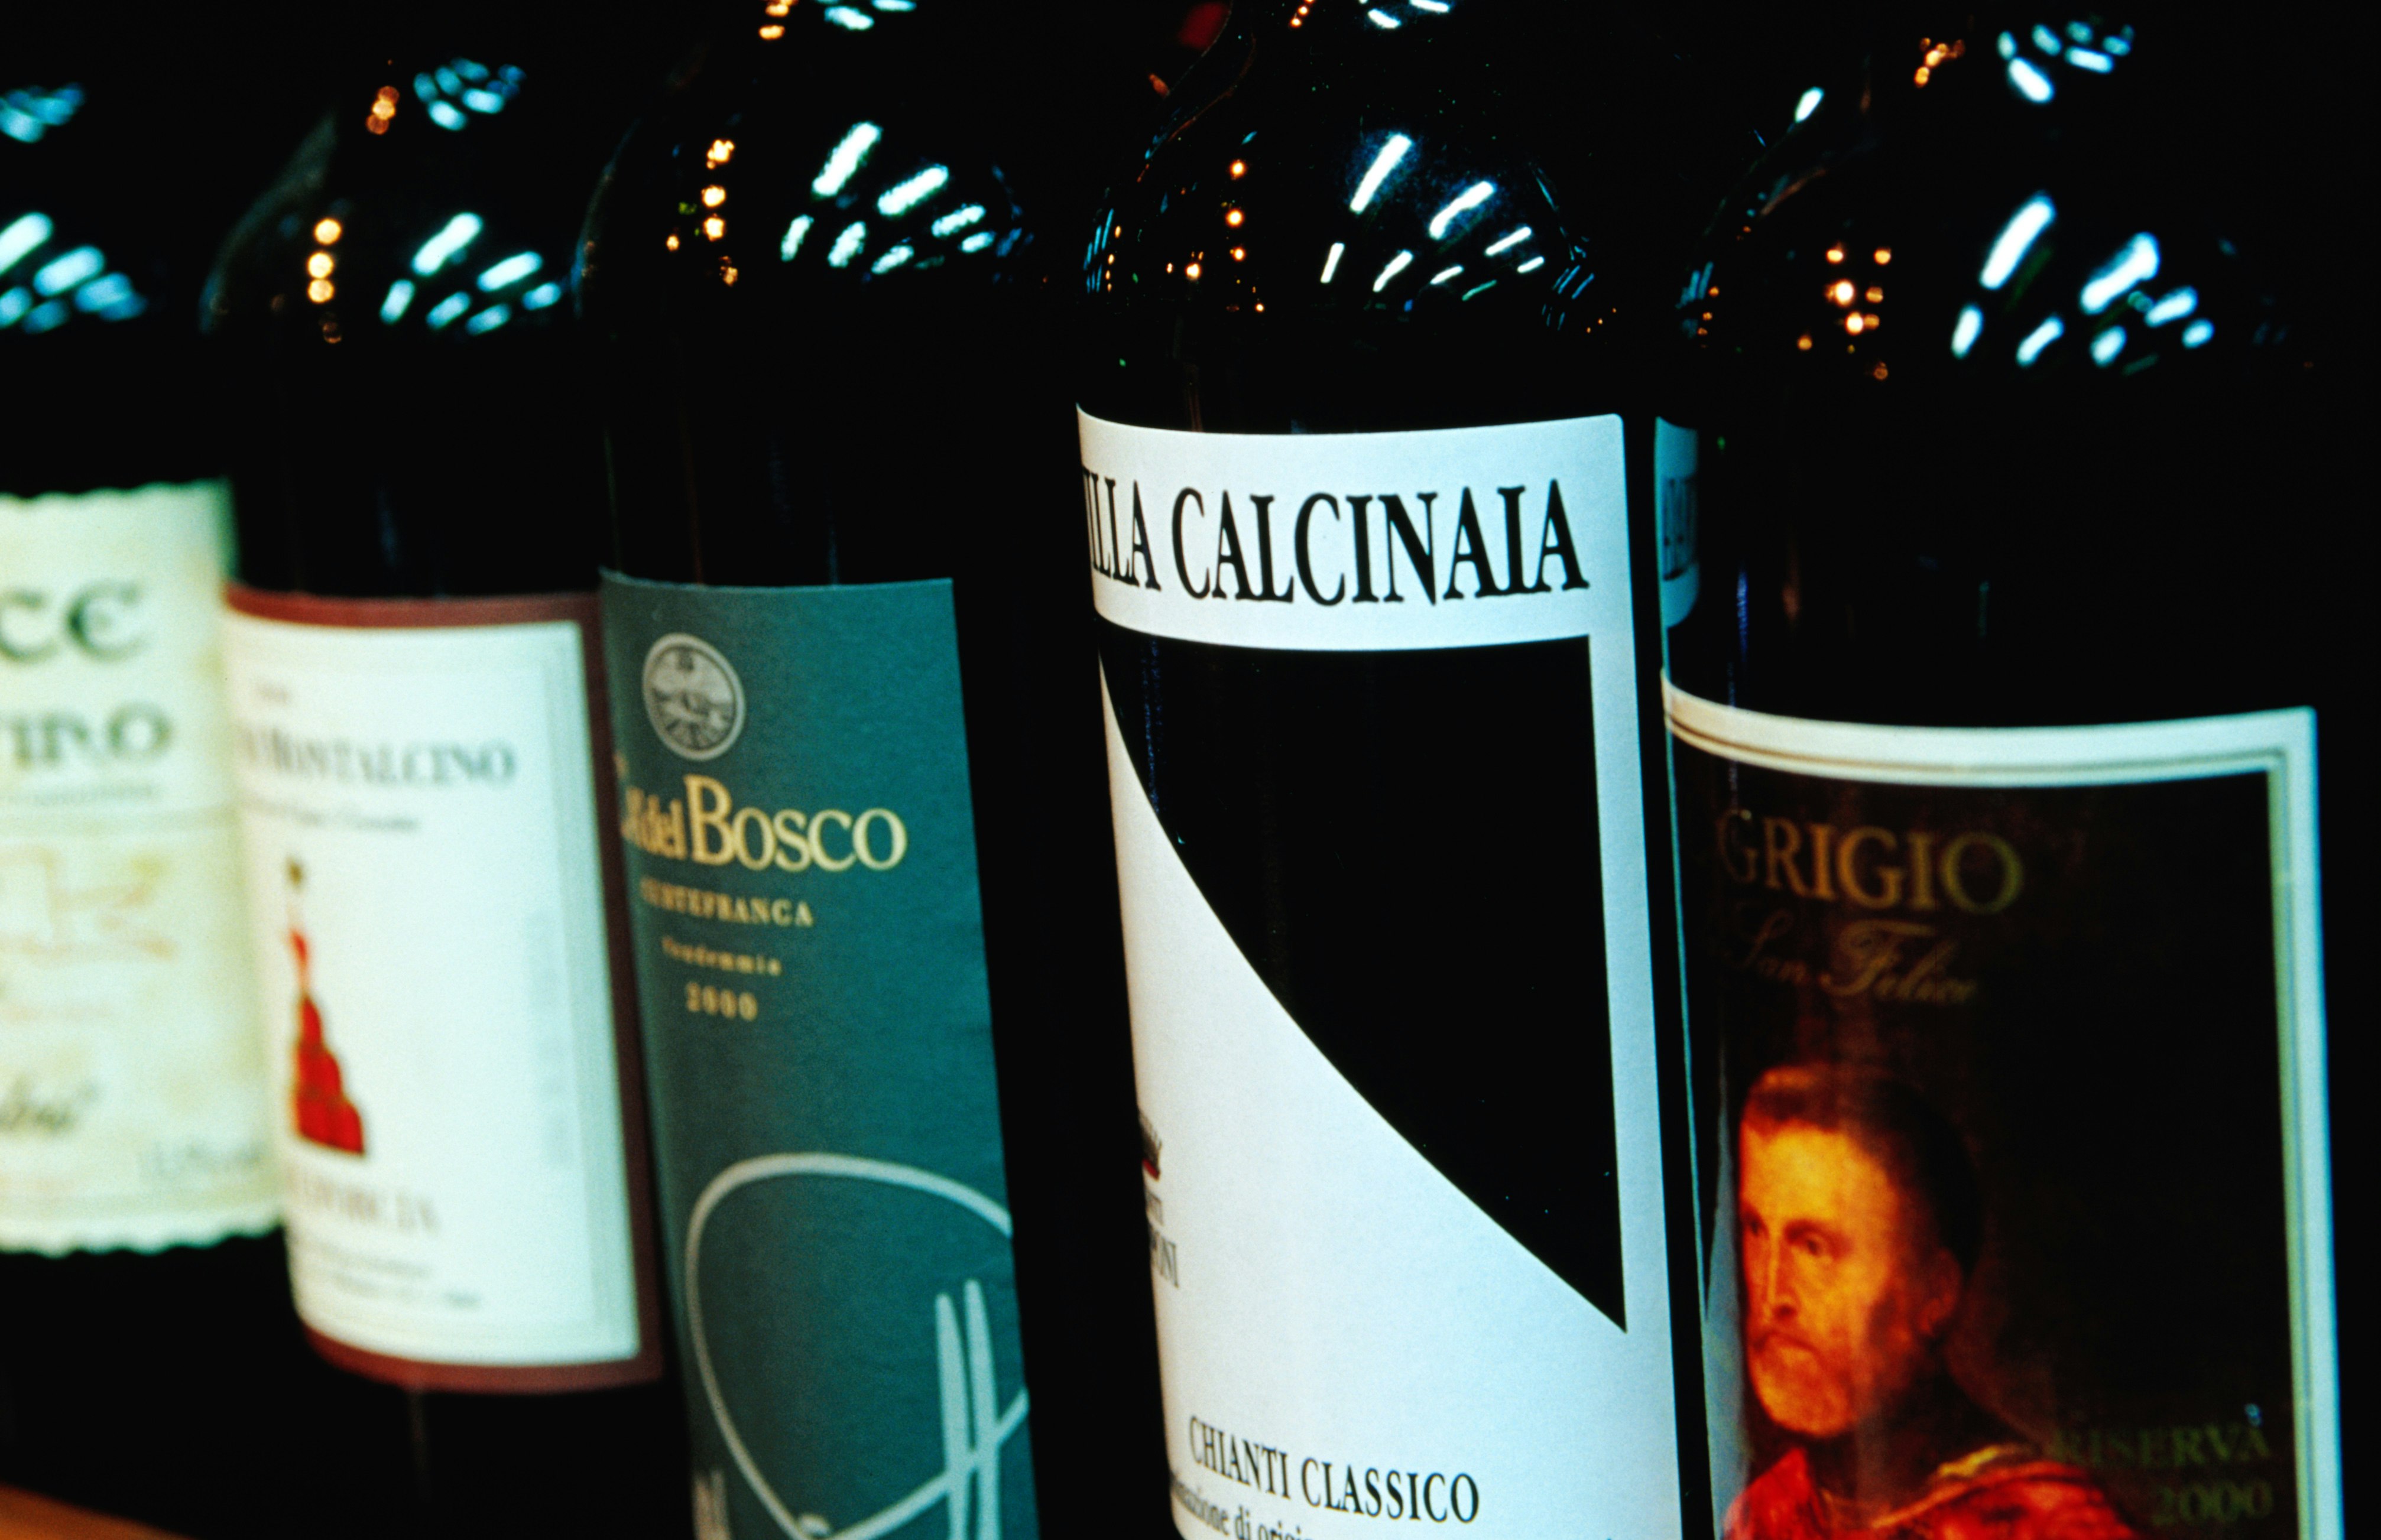 Bottles of wine for sale in Naples